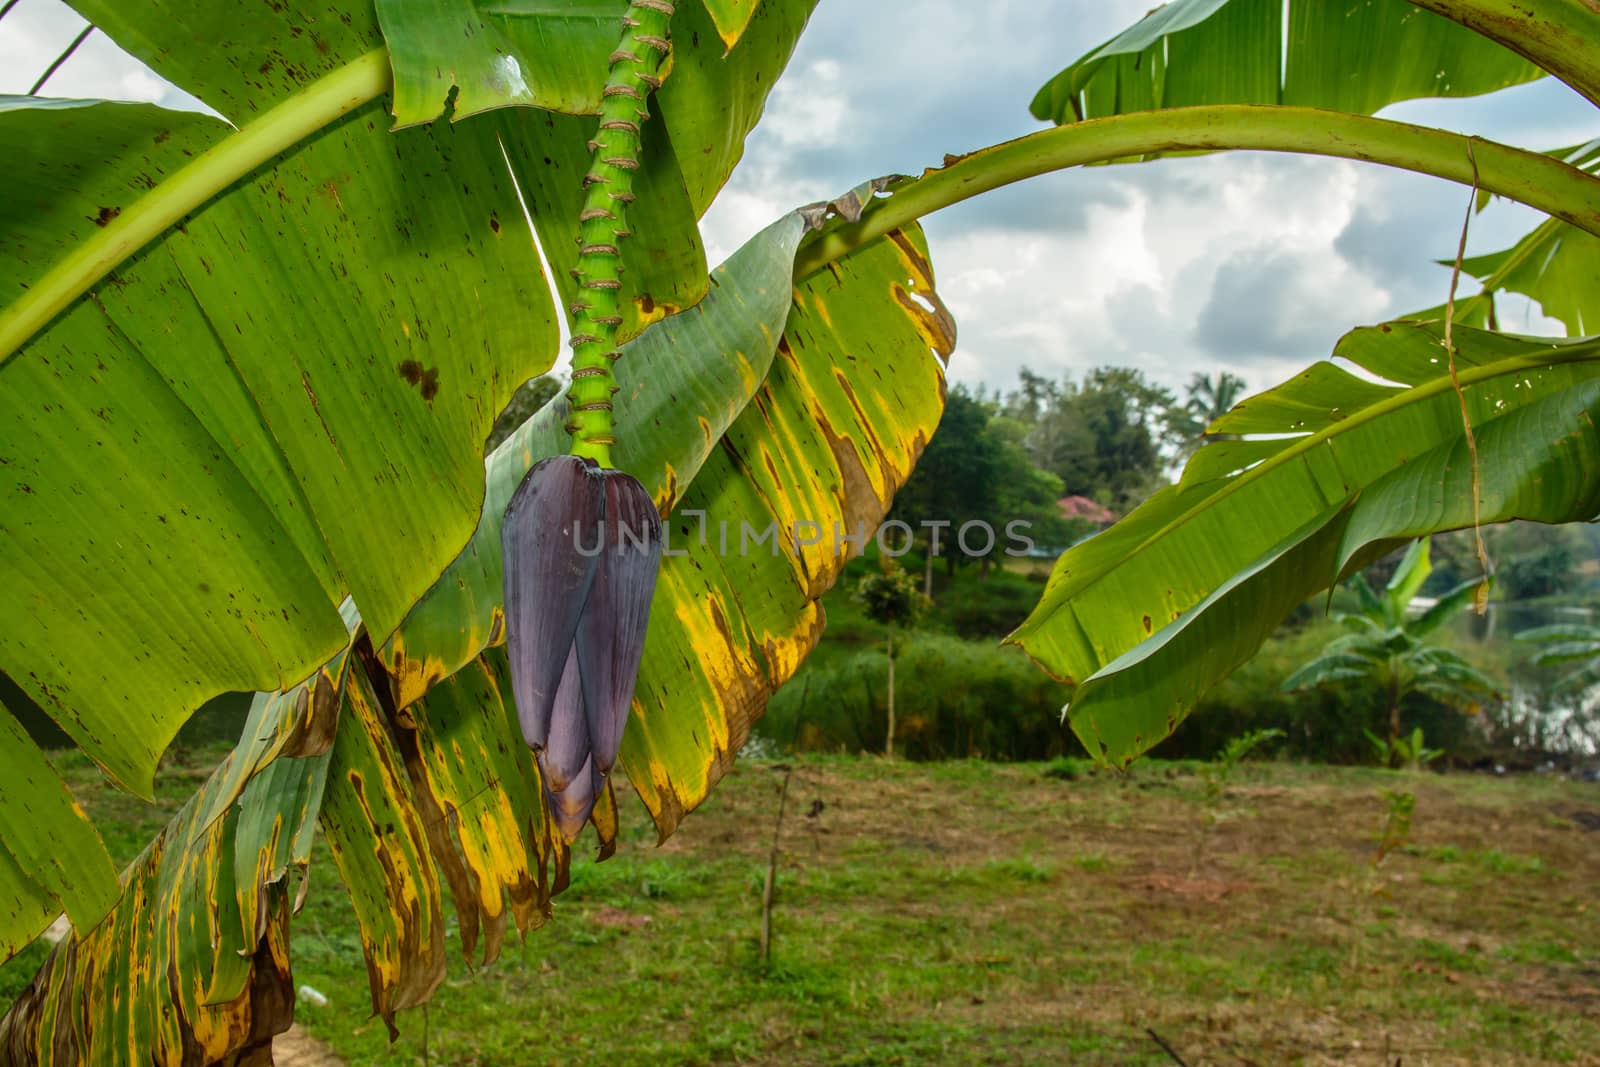 the banana blossom is found in the banana farm